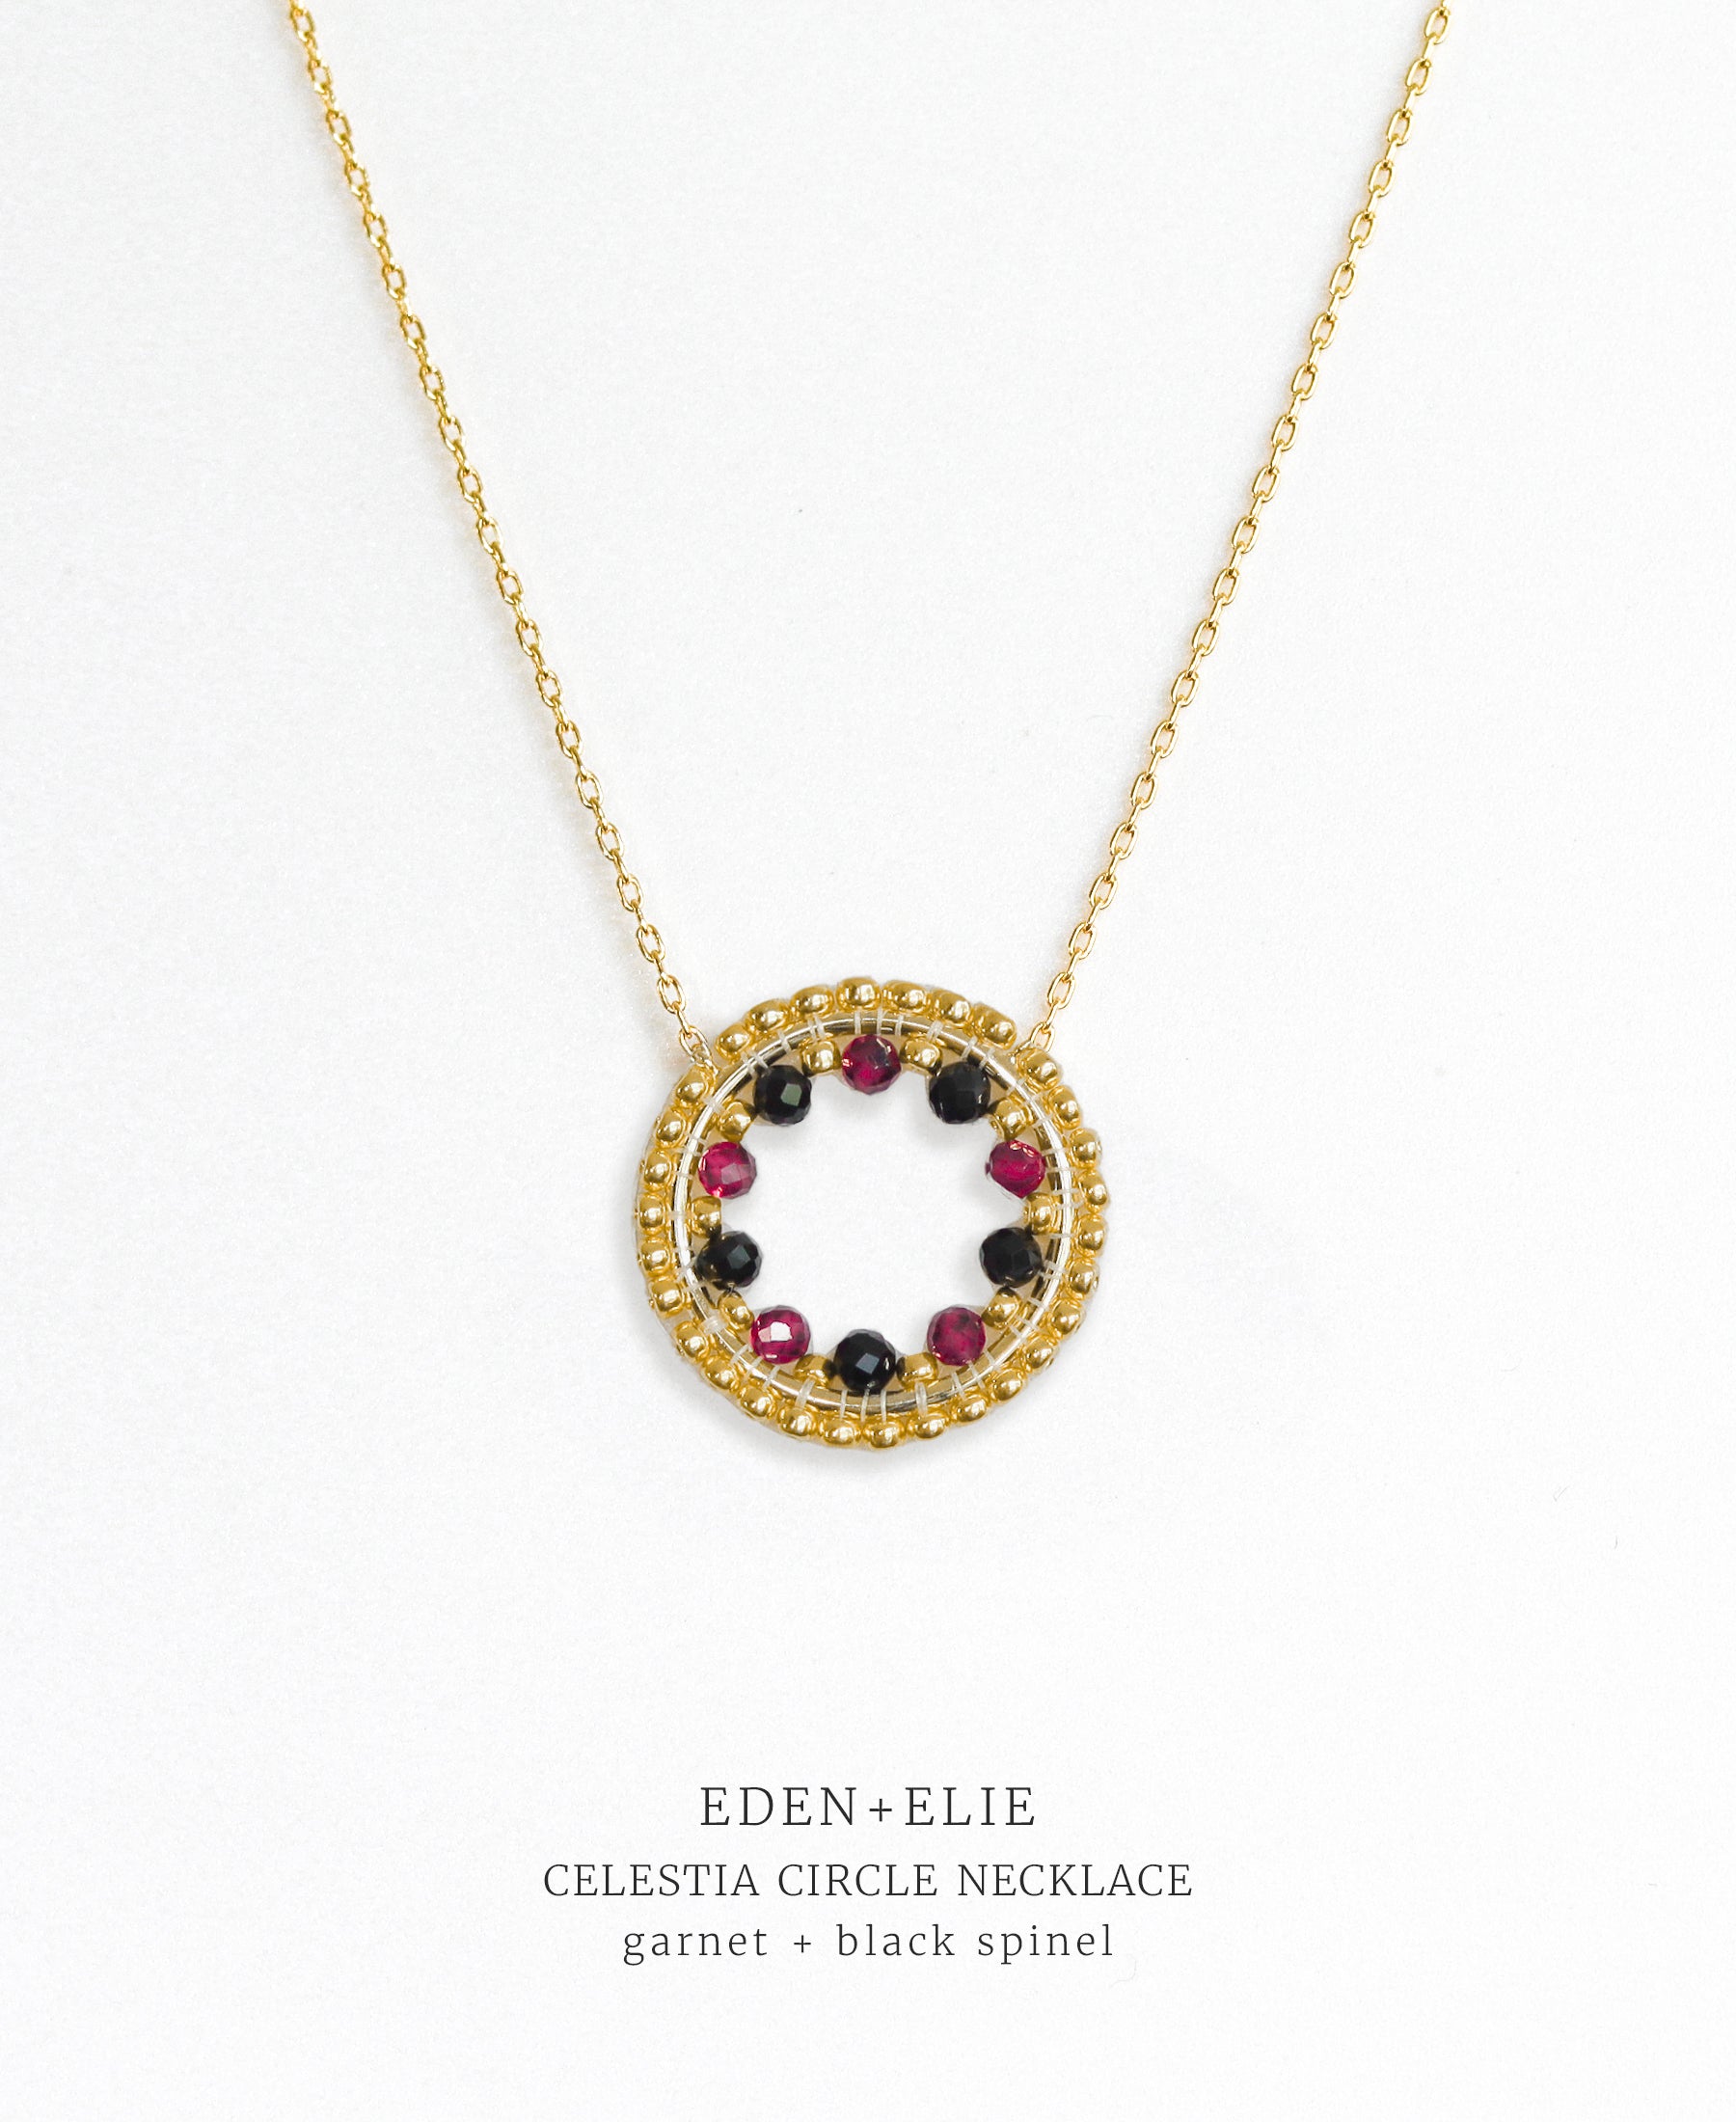 EDEN + ELIE Celestia Circle Necklace - Garnet + Black Spinel